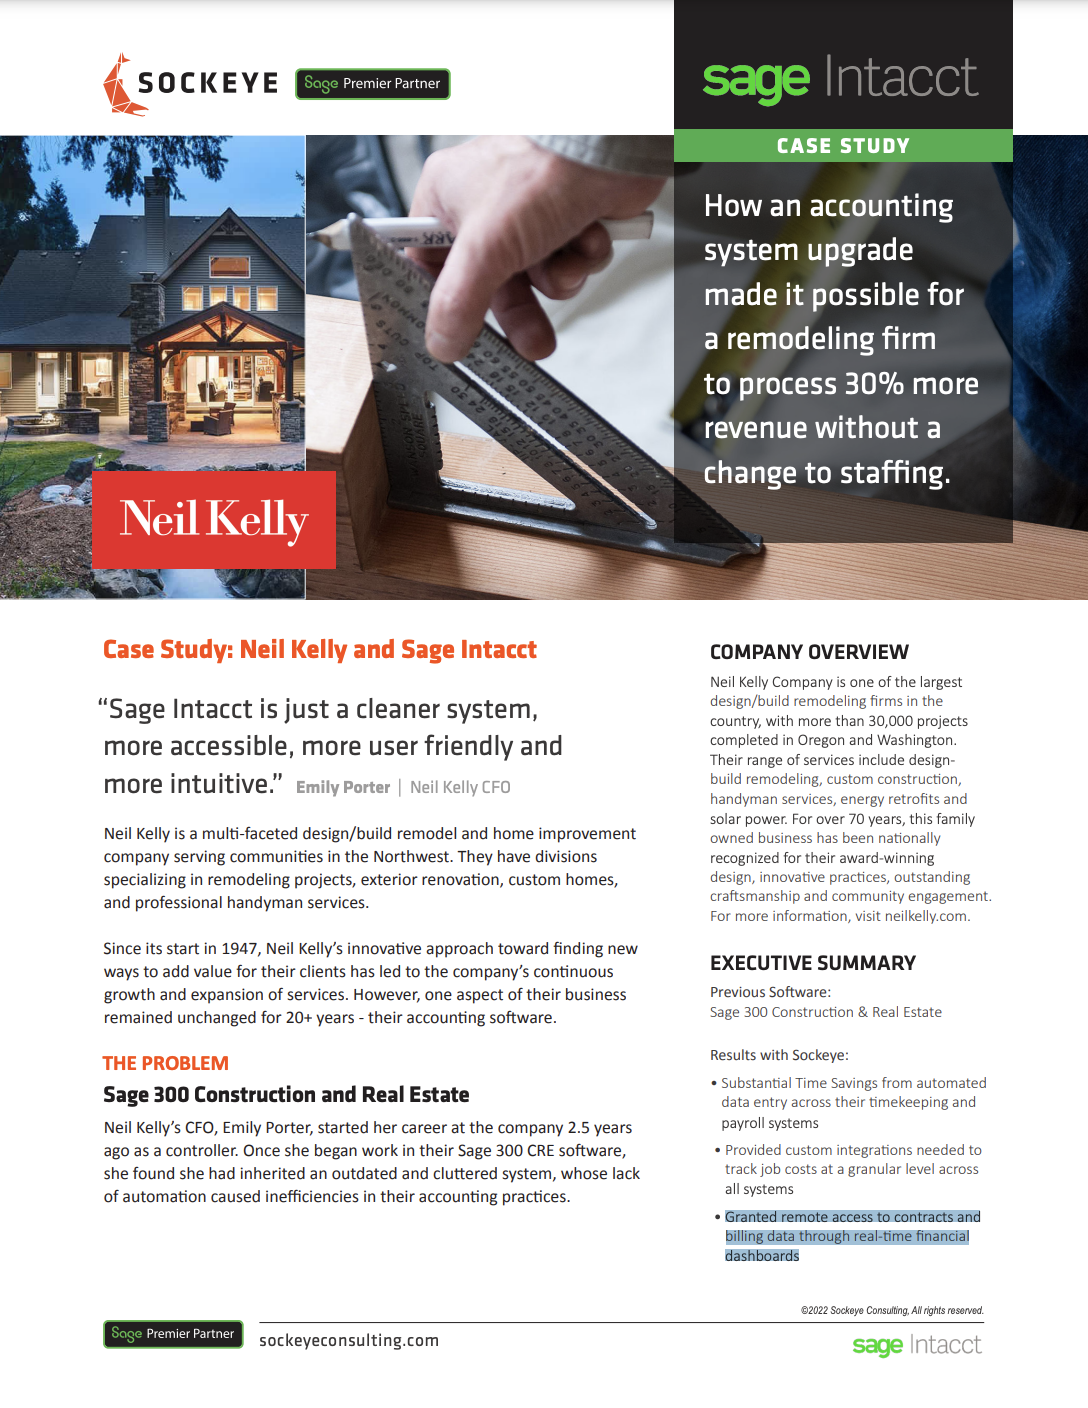 Neil Kelly Sage Intacct Case Study